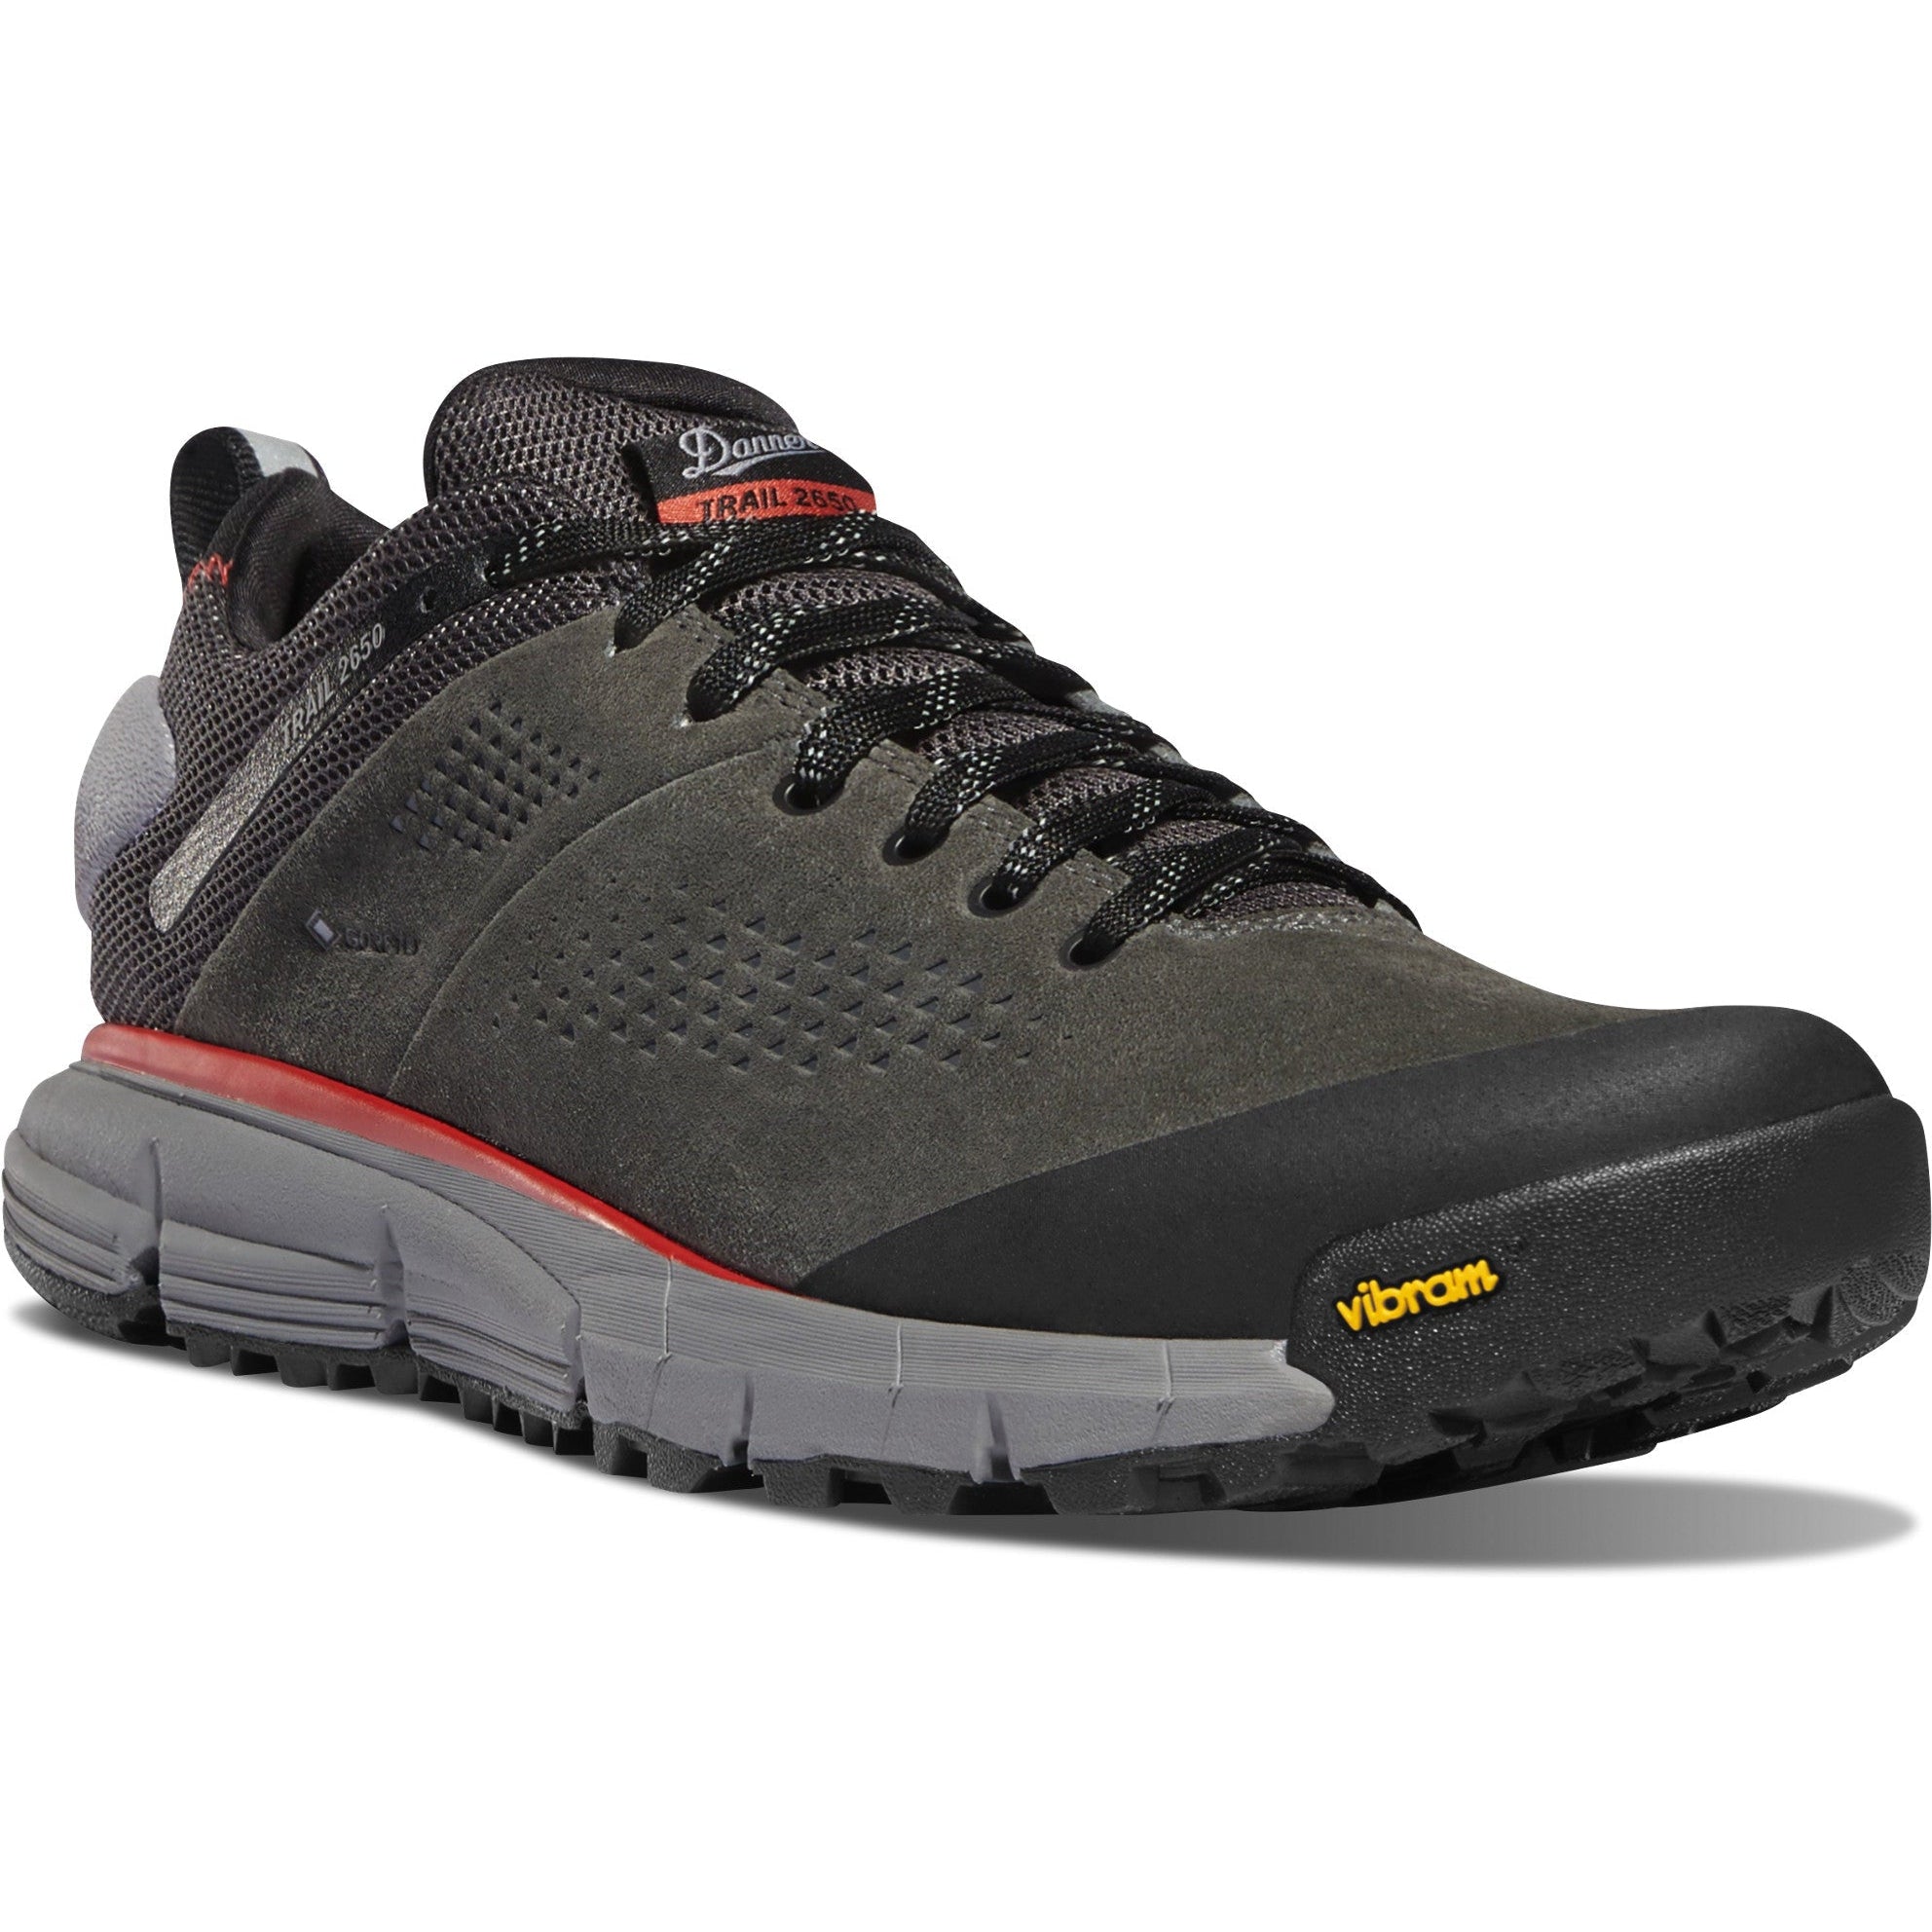 Danner Men's Trail 2650 3" WP Hiking Shoe - Dark Gray - 61200 7 / Medium / Gray - Overlook Boots